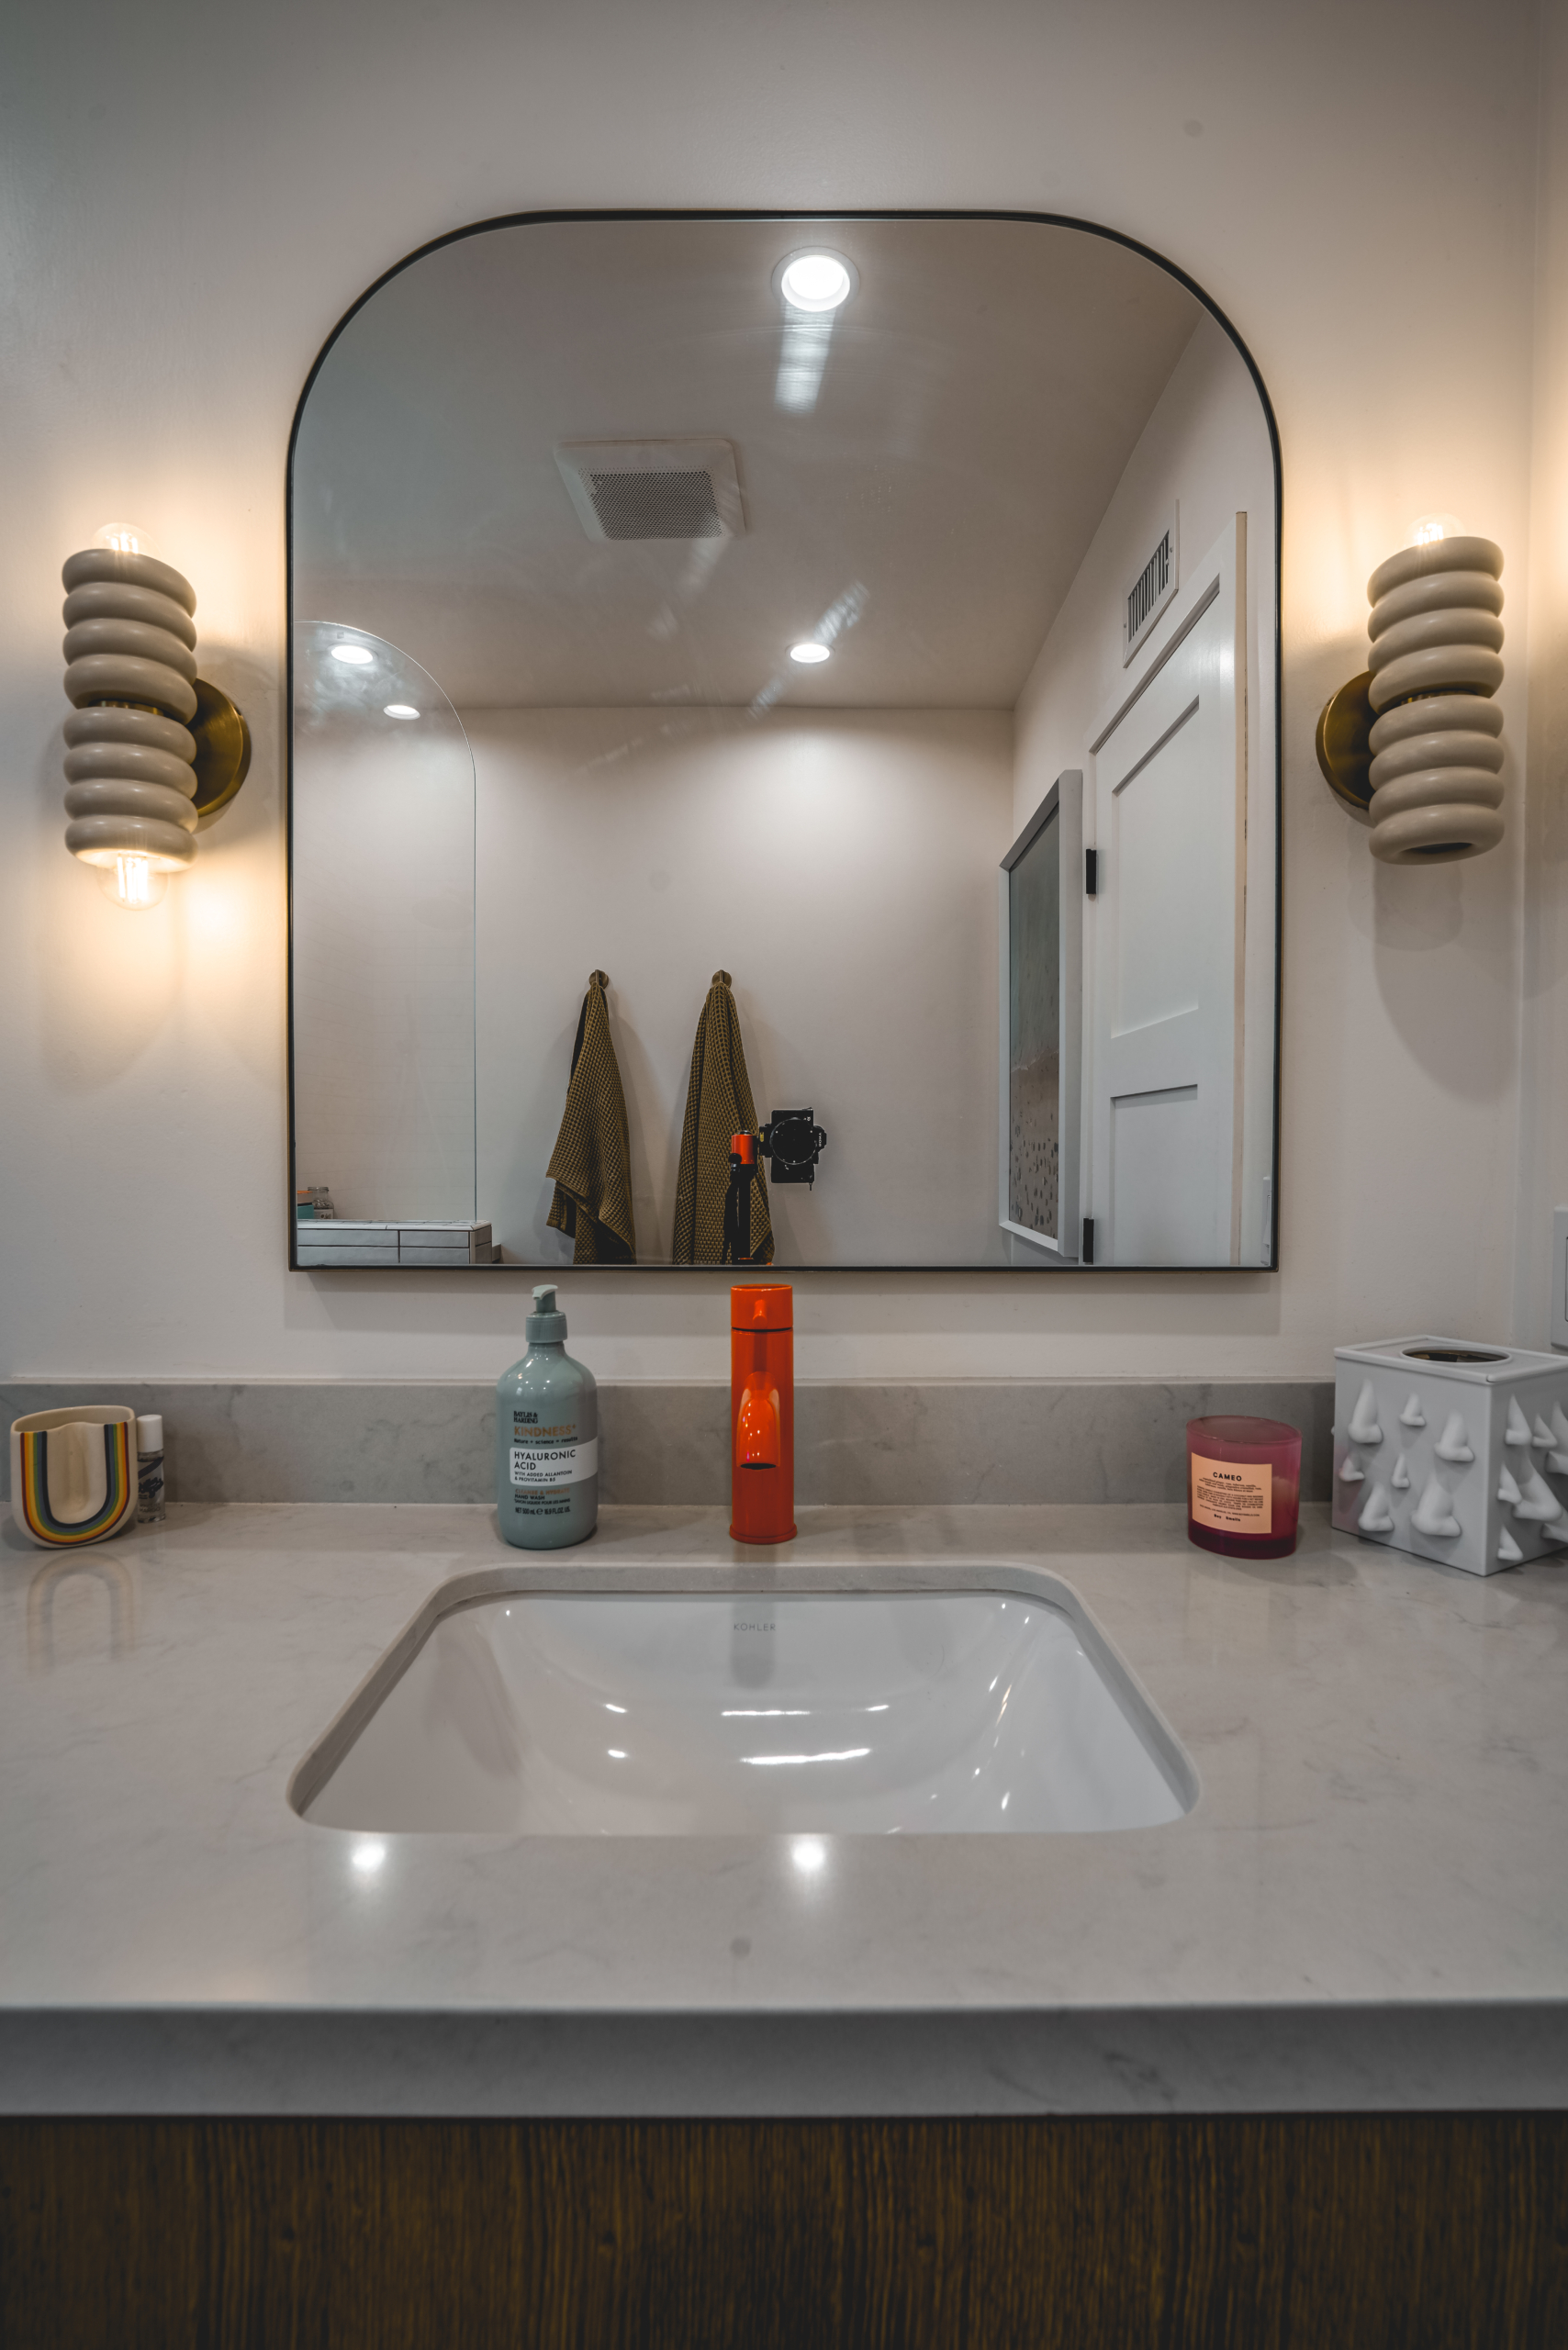 Orange County Bathroom Remodel